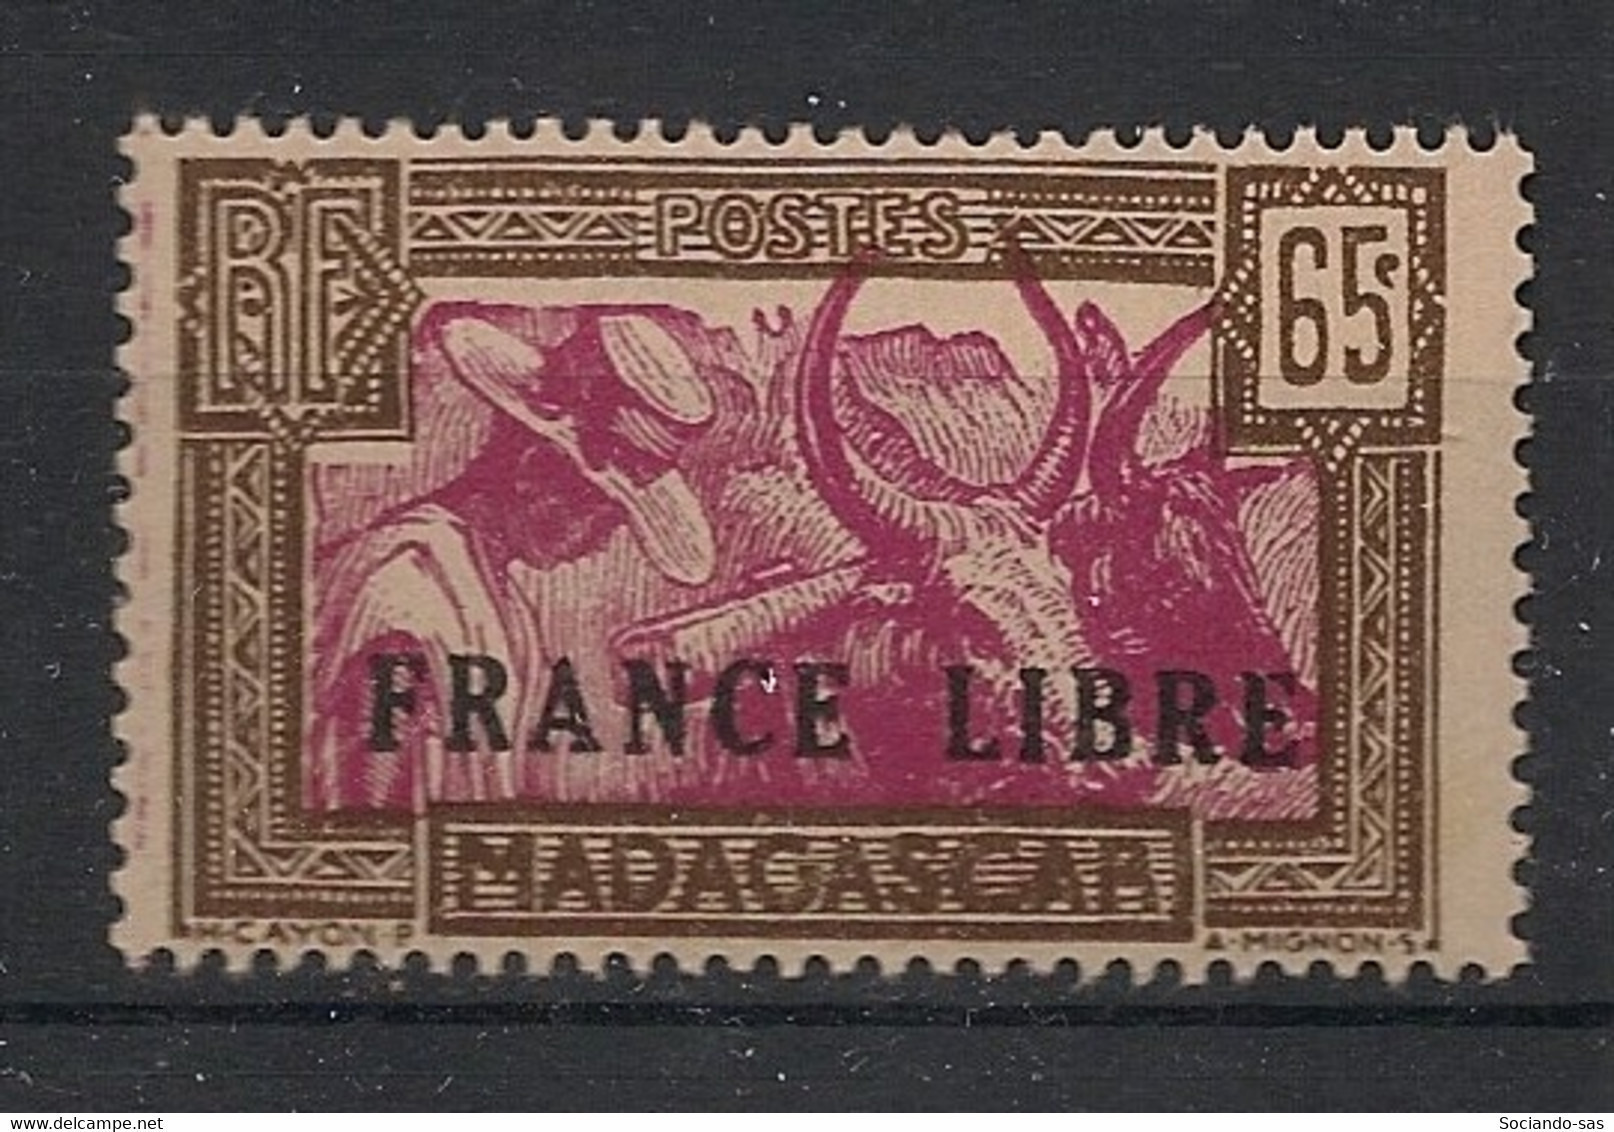 MADAGASCAR - 1942 - N°YT. 236 - France Libre - Neuf GC** / MNH / Postfrisch - Nuovi